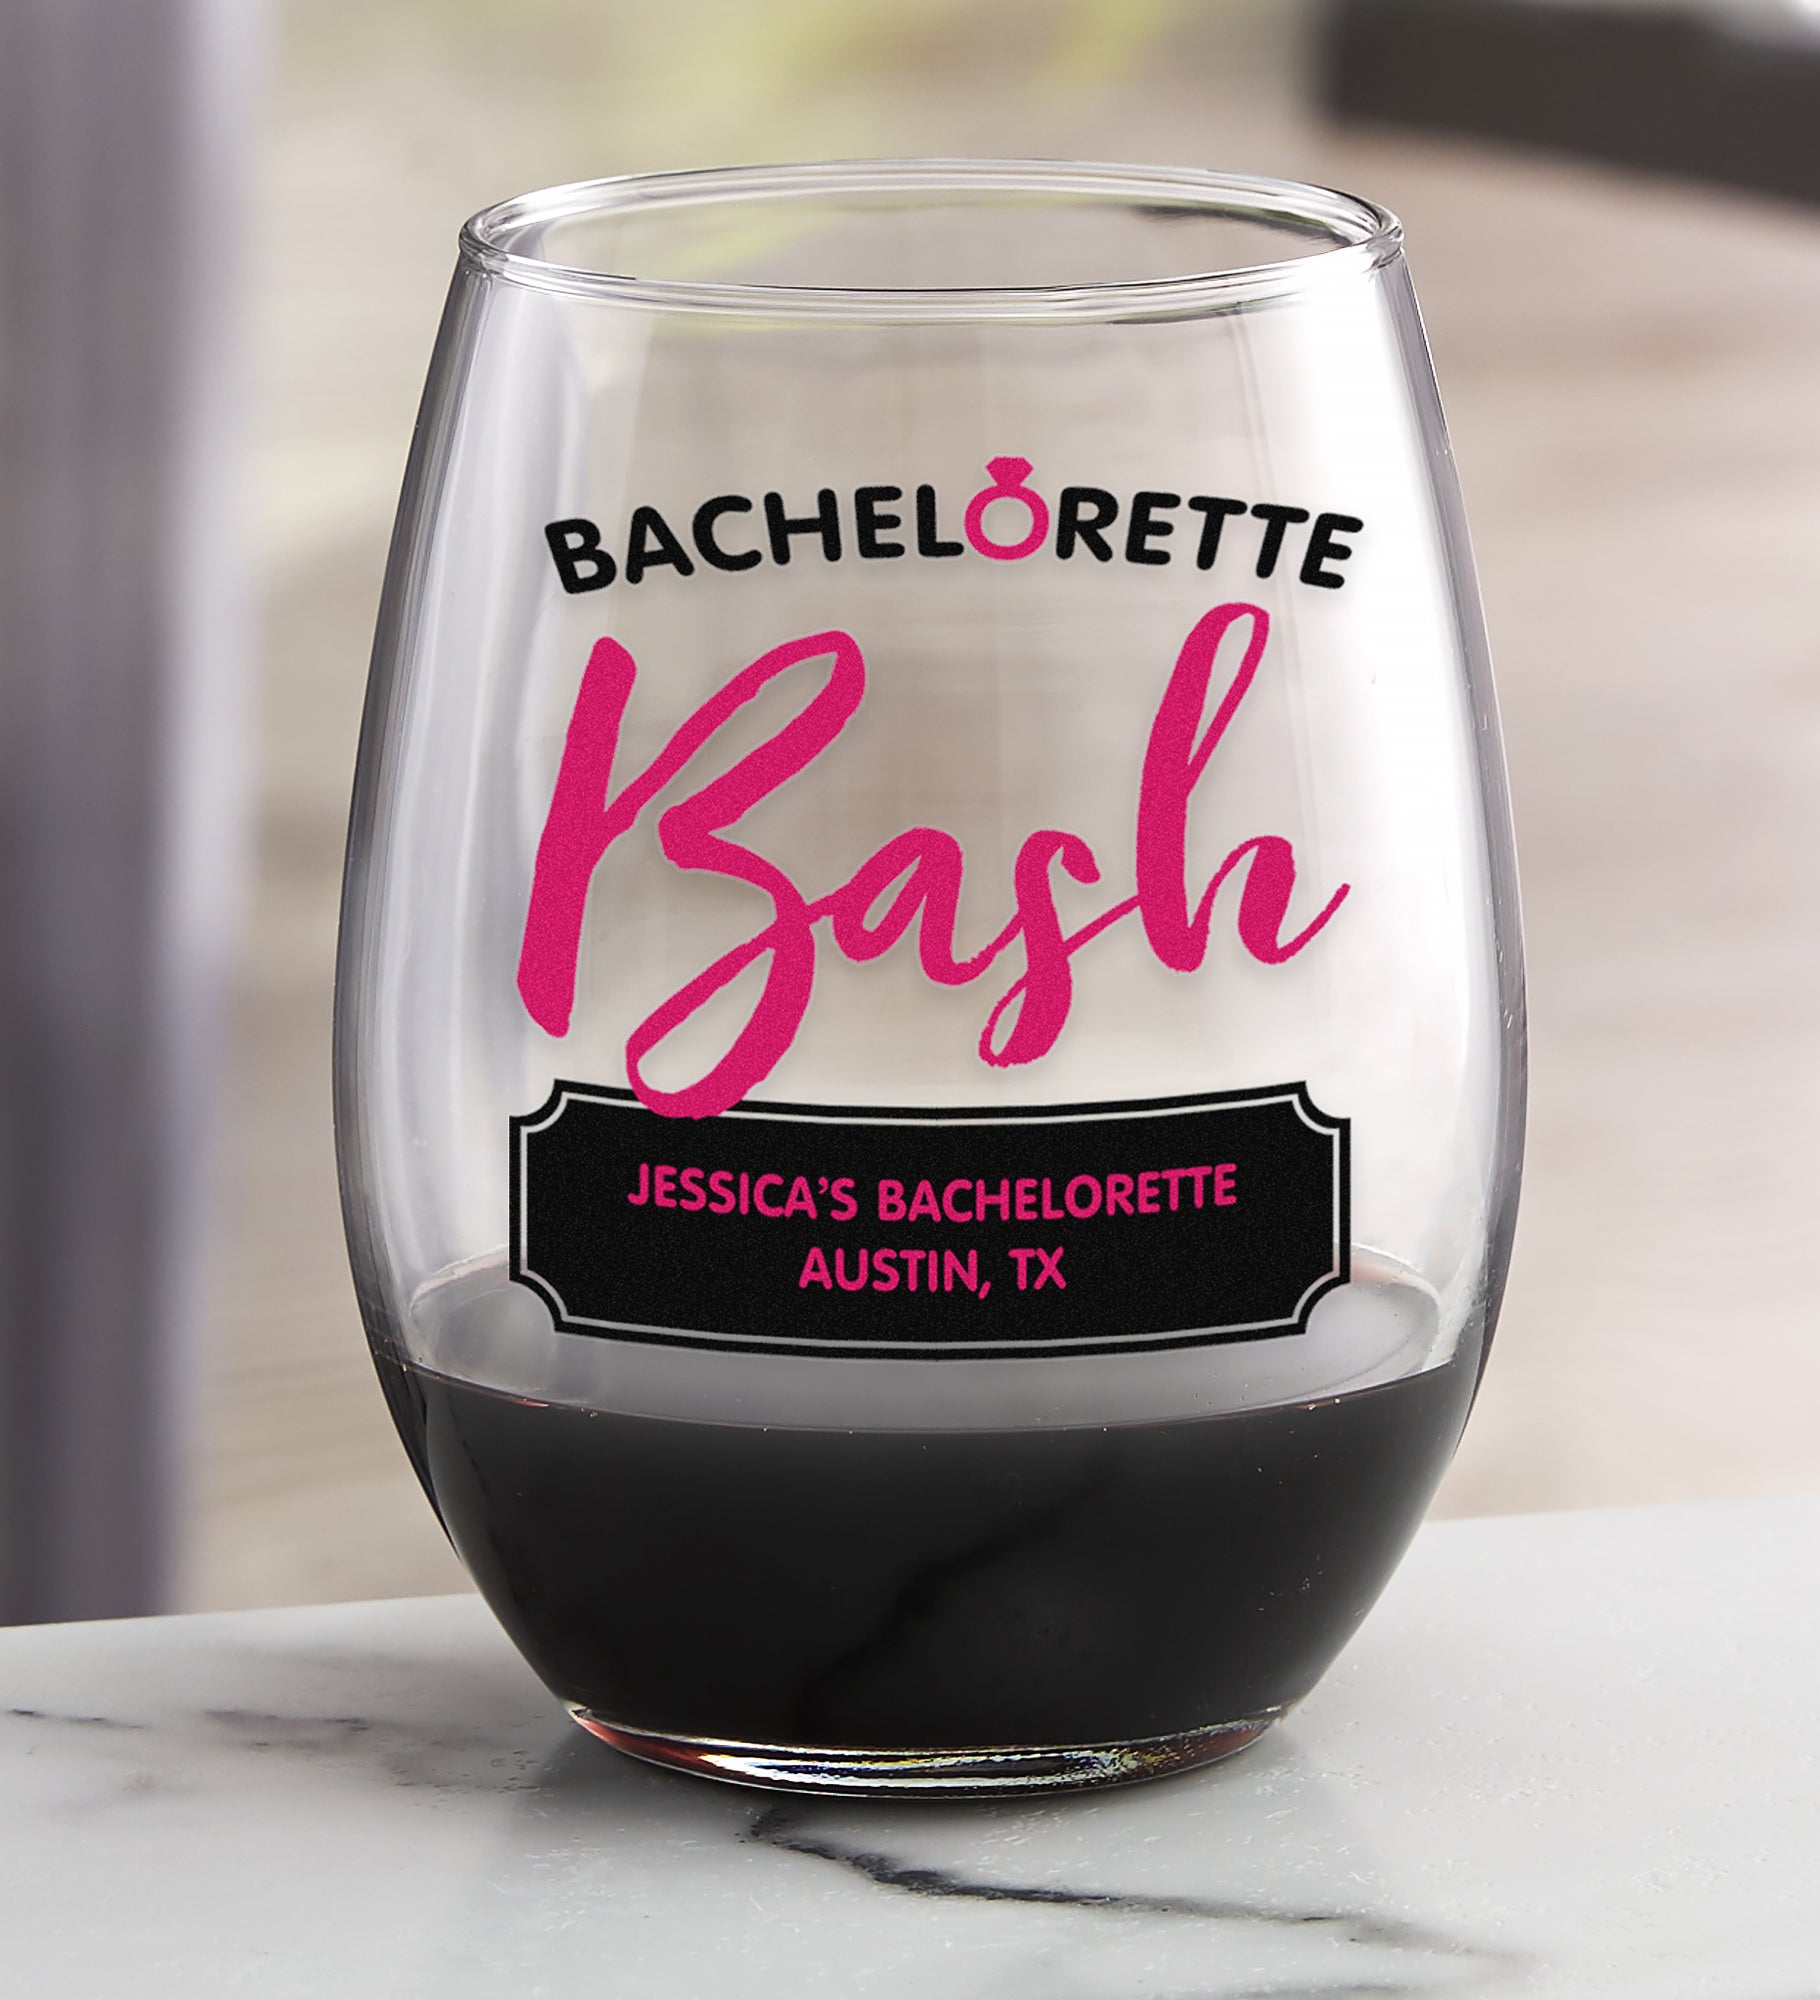 Bachelorette Bash Personalized Wine Glass Collection